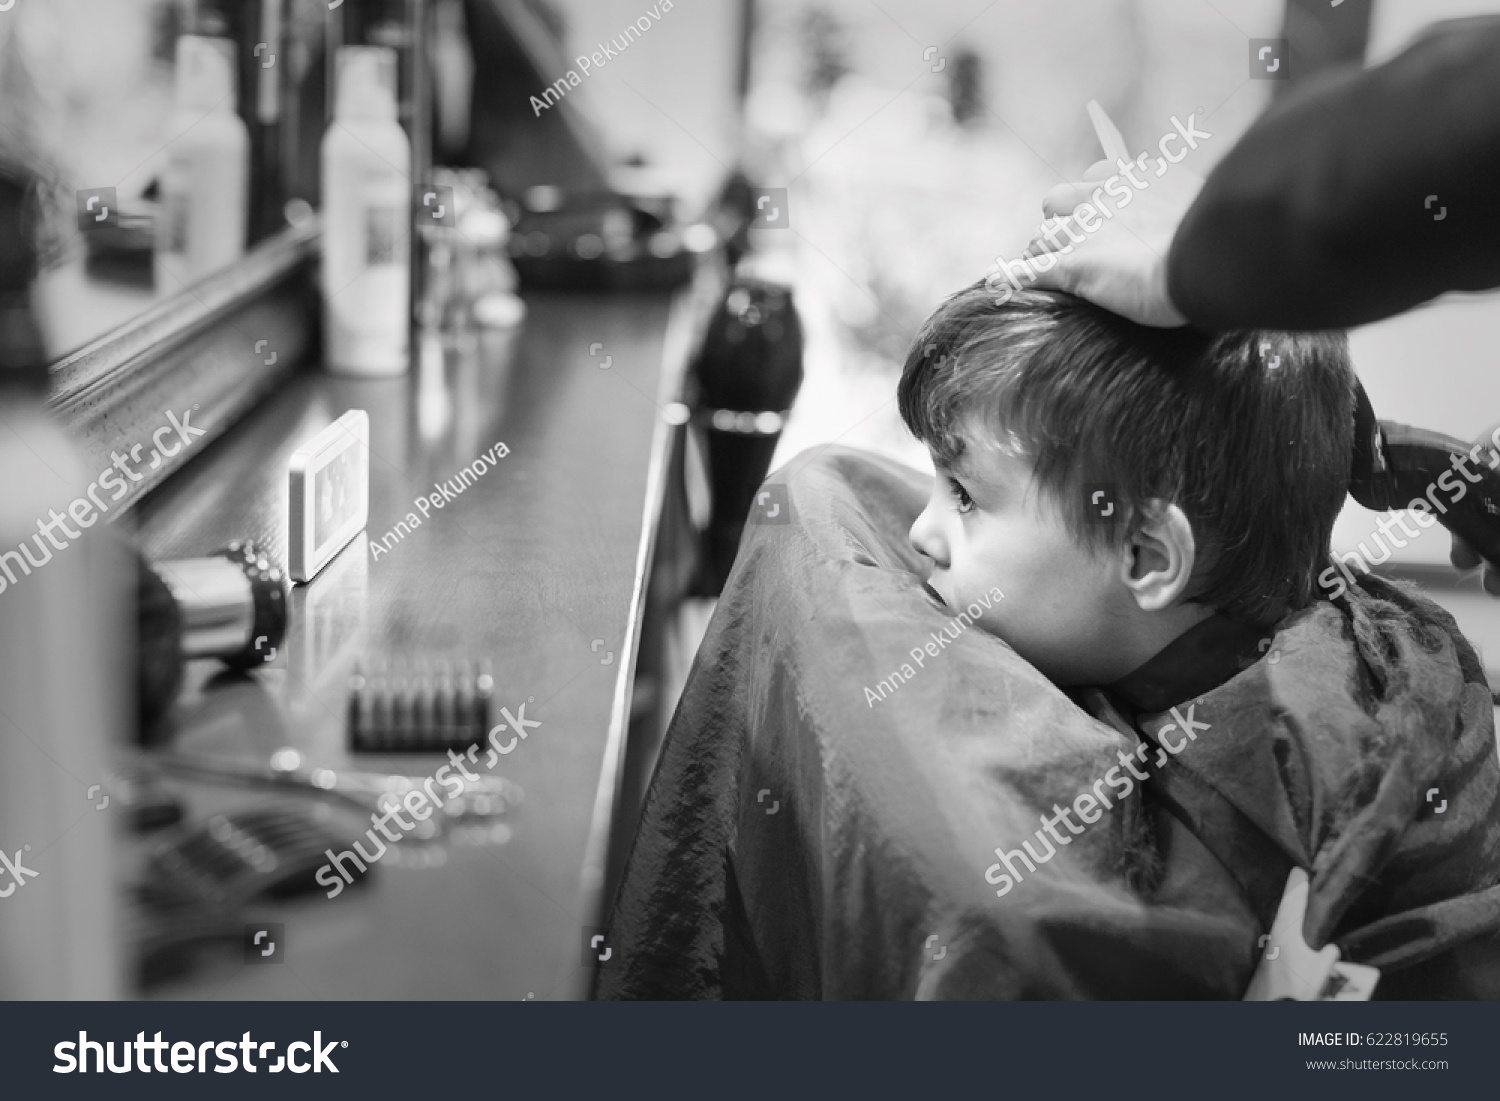 Toddler Boy 3 Year Old Having Stock Photo Edit Now 622819655